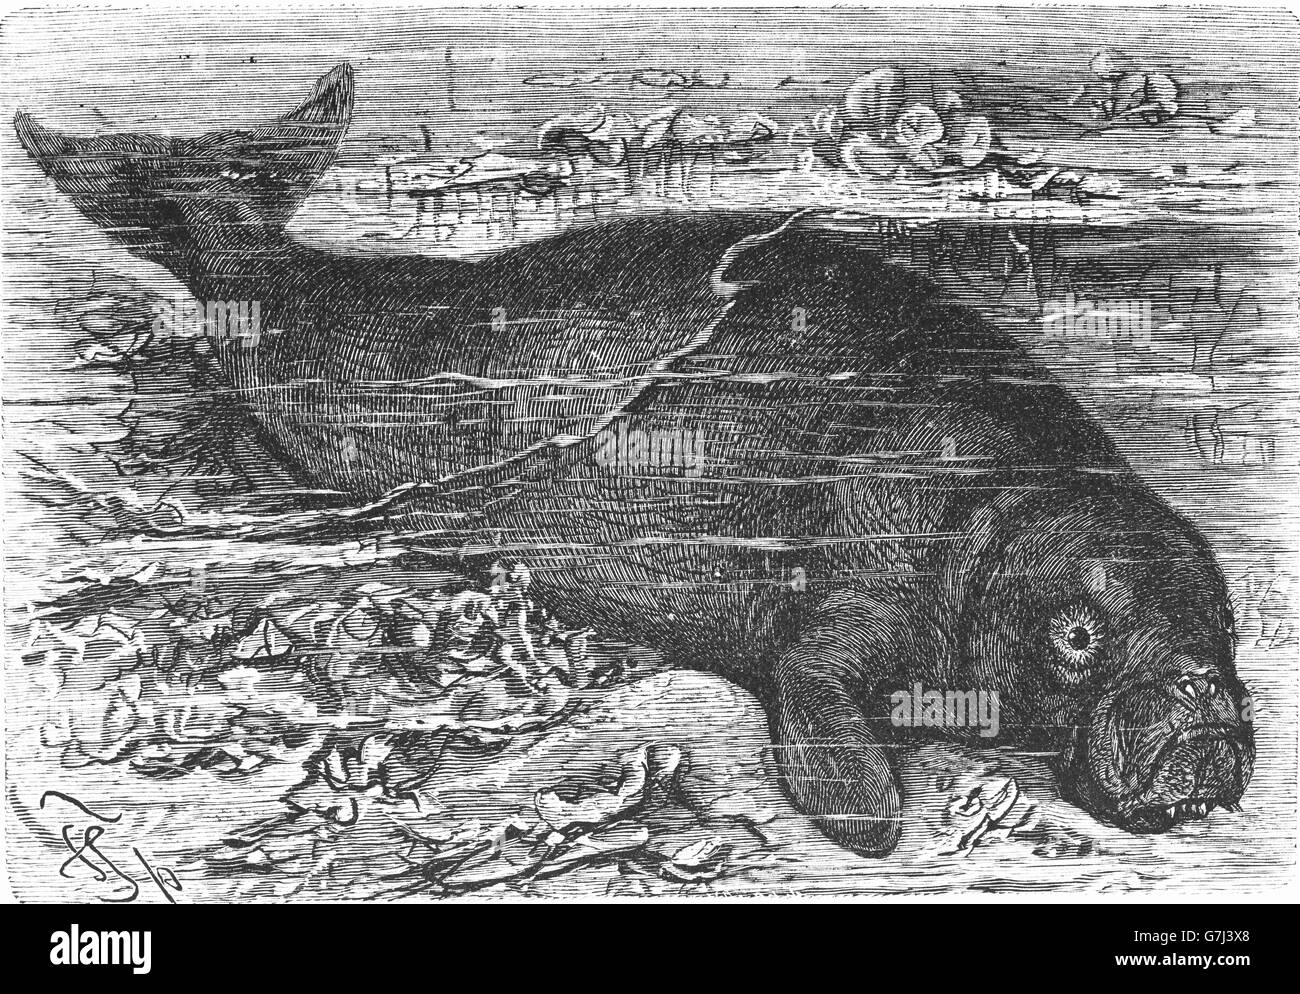 Dugong, Dugong dugon, Sirenia, illustration from book dated 1904 Stock Photo